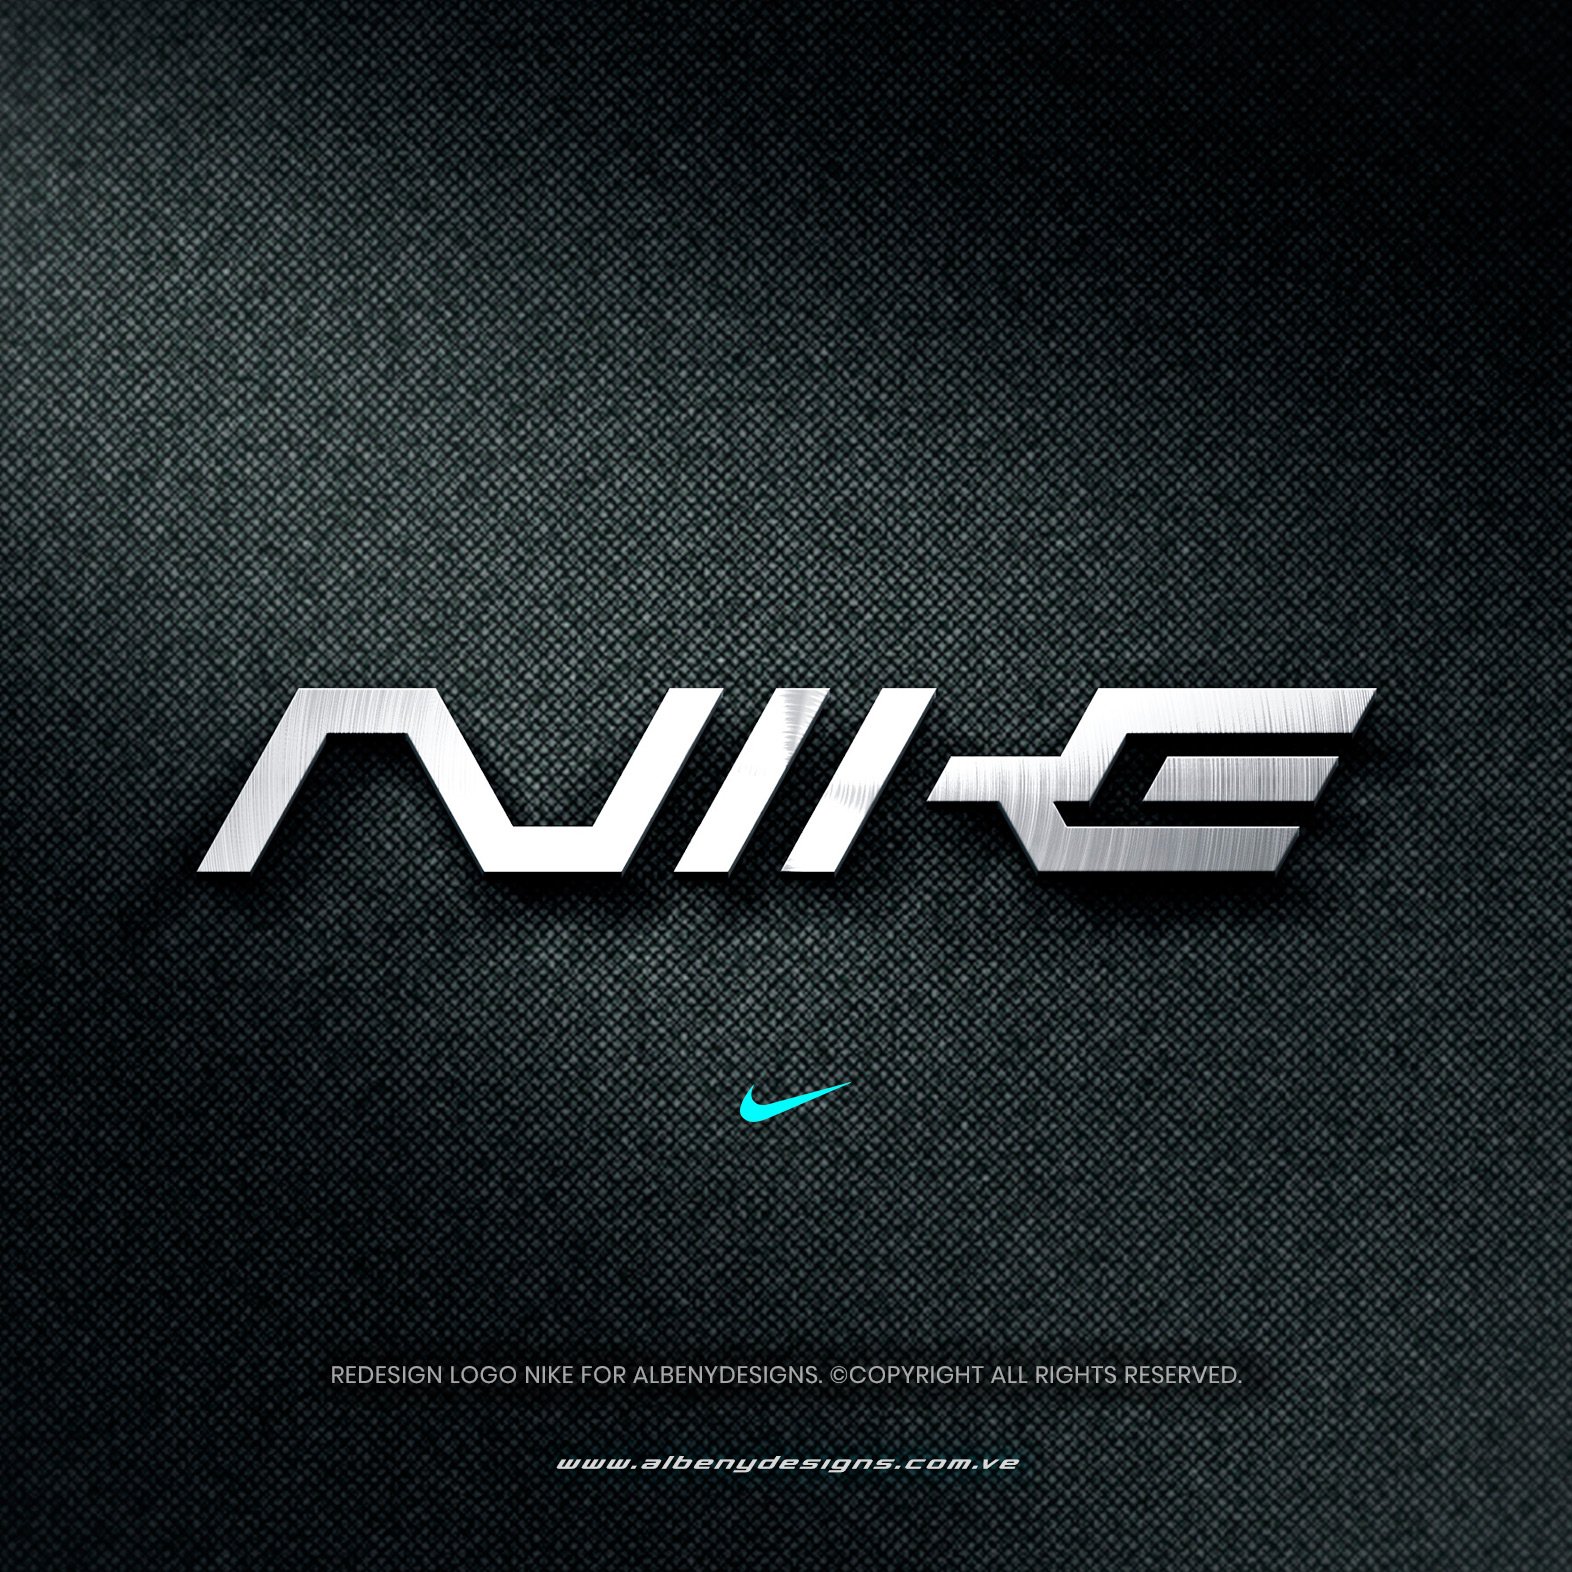 Albeny Designs on Twitter: logo nike for albeny designs Project 1350 #nike #hyperadapt #future #redesigns #redesignlogo #logo #backtothefuture #designs #ilustratorcc @nike #advertisement #logo #brand #brands ...